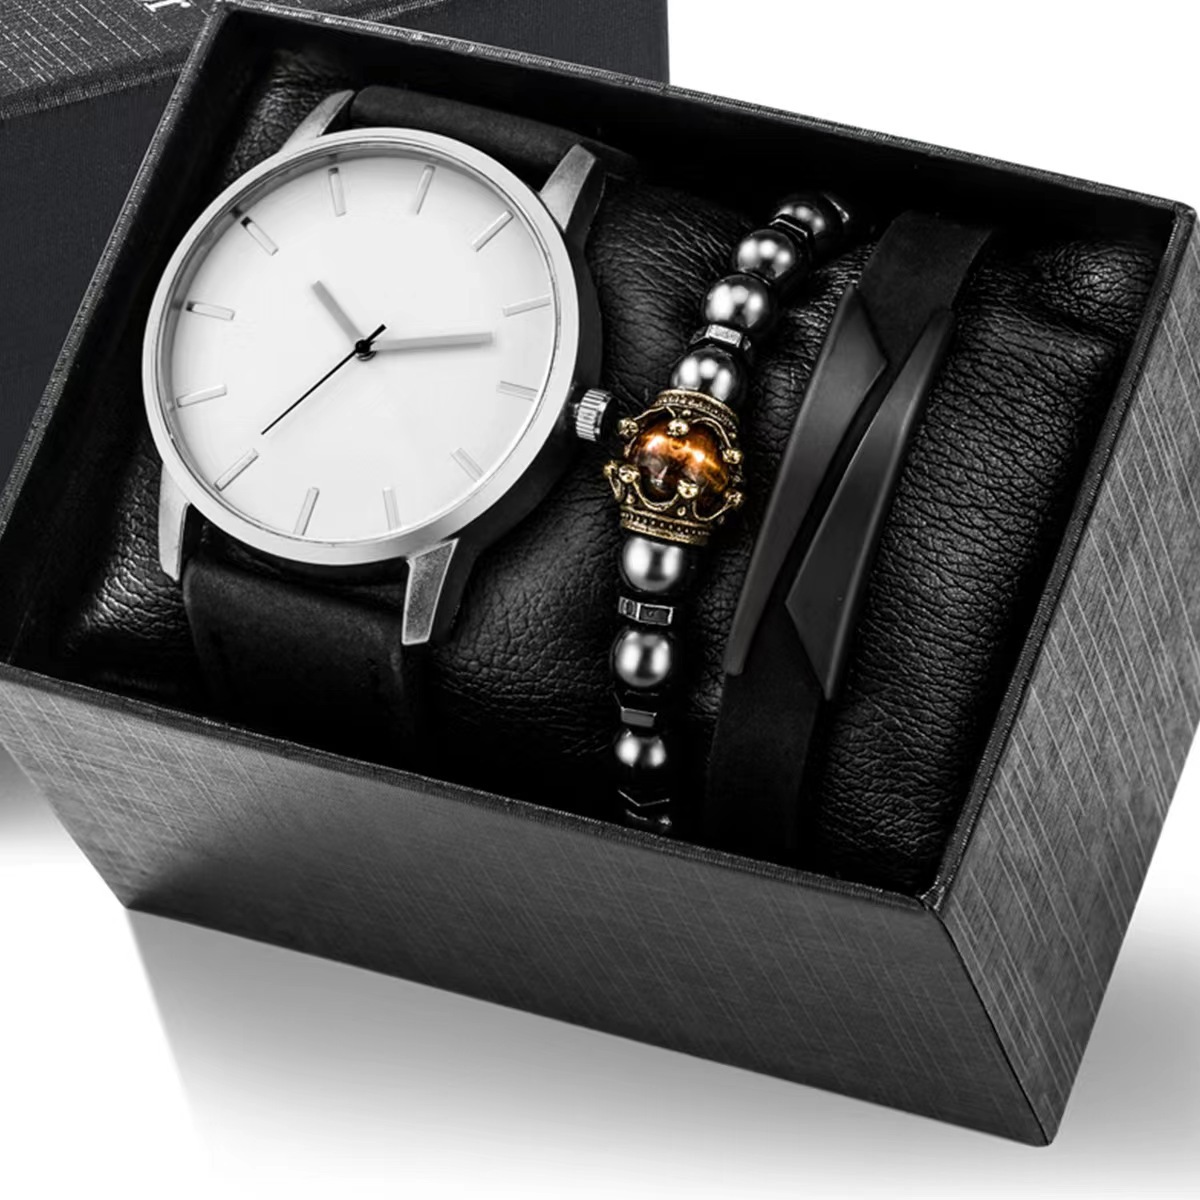 7 watch, bracelet and box